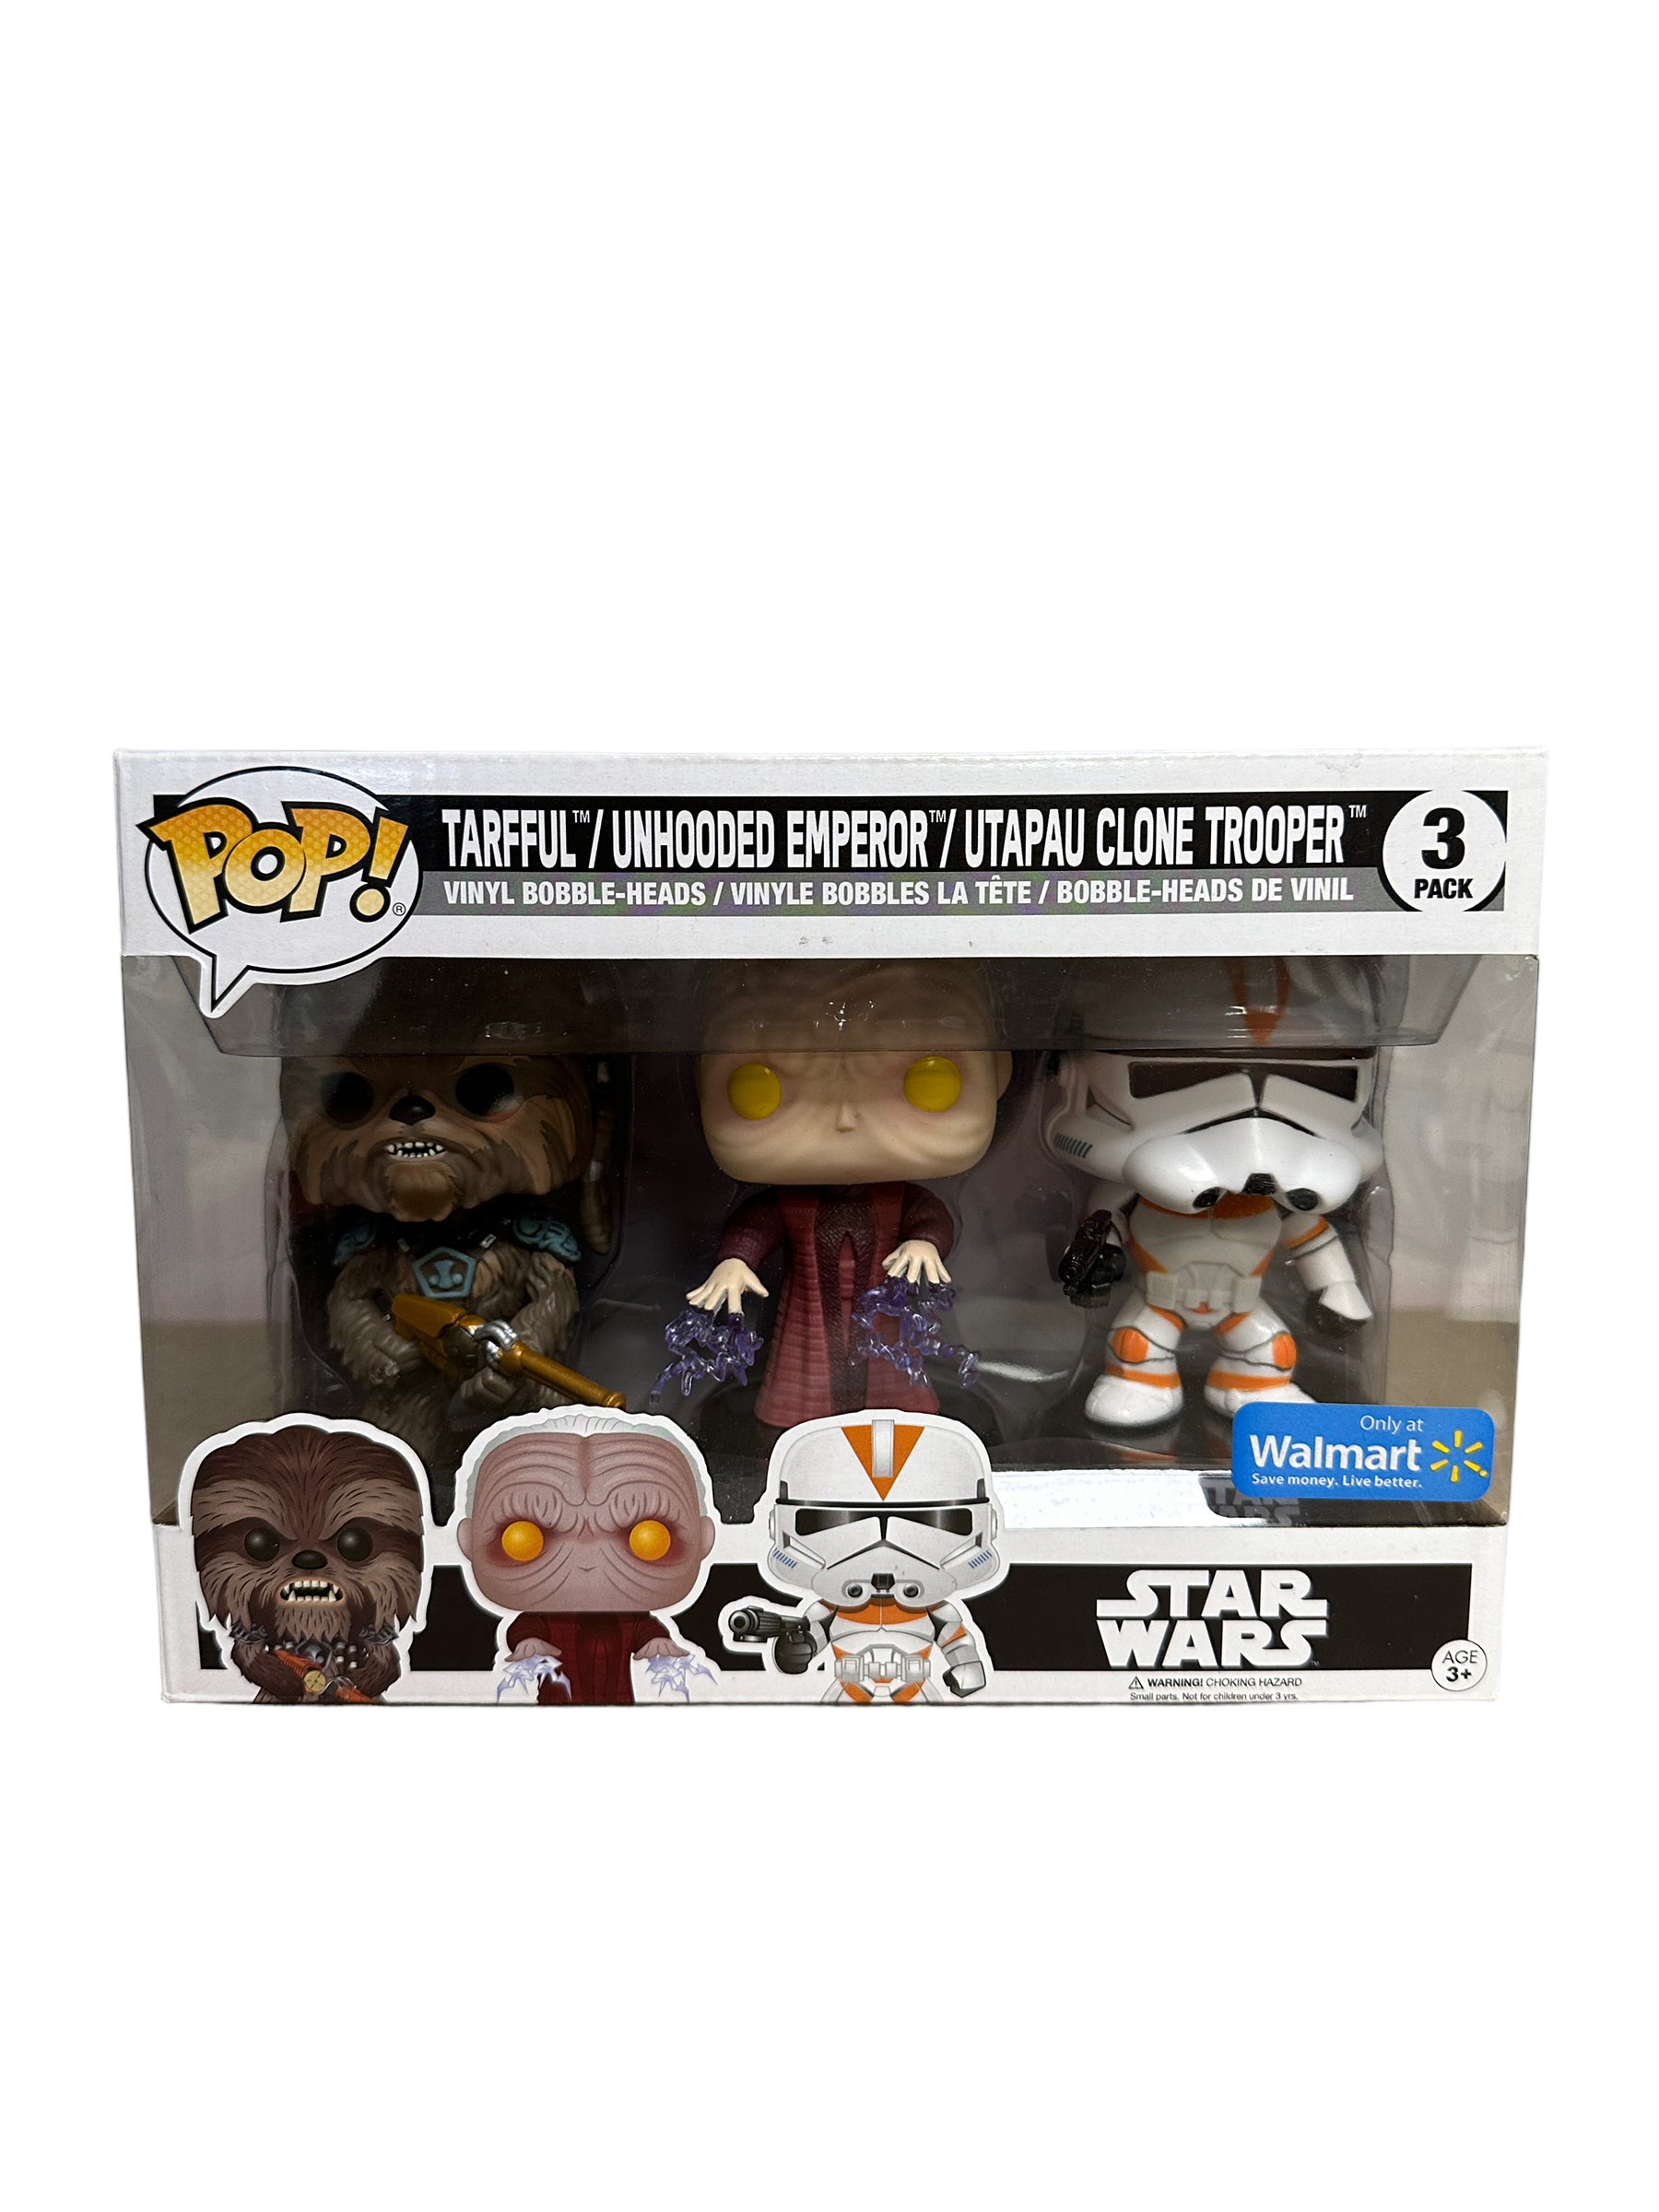 Tarfful / Unhooded Emperor / Utapau Clone Trooper 3 Pack Funko Pop! - Star Wars - Walmart Exclusive - Condition 9/10